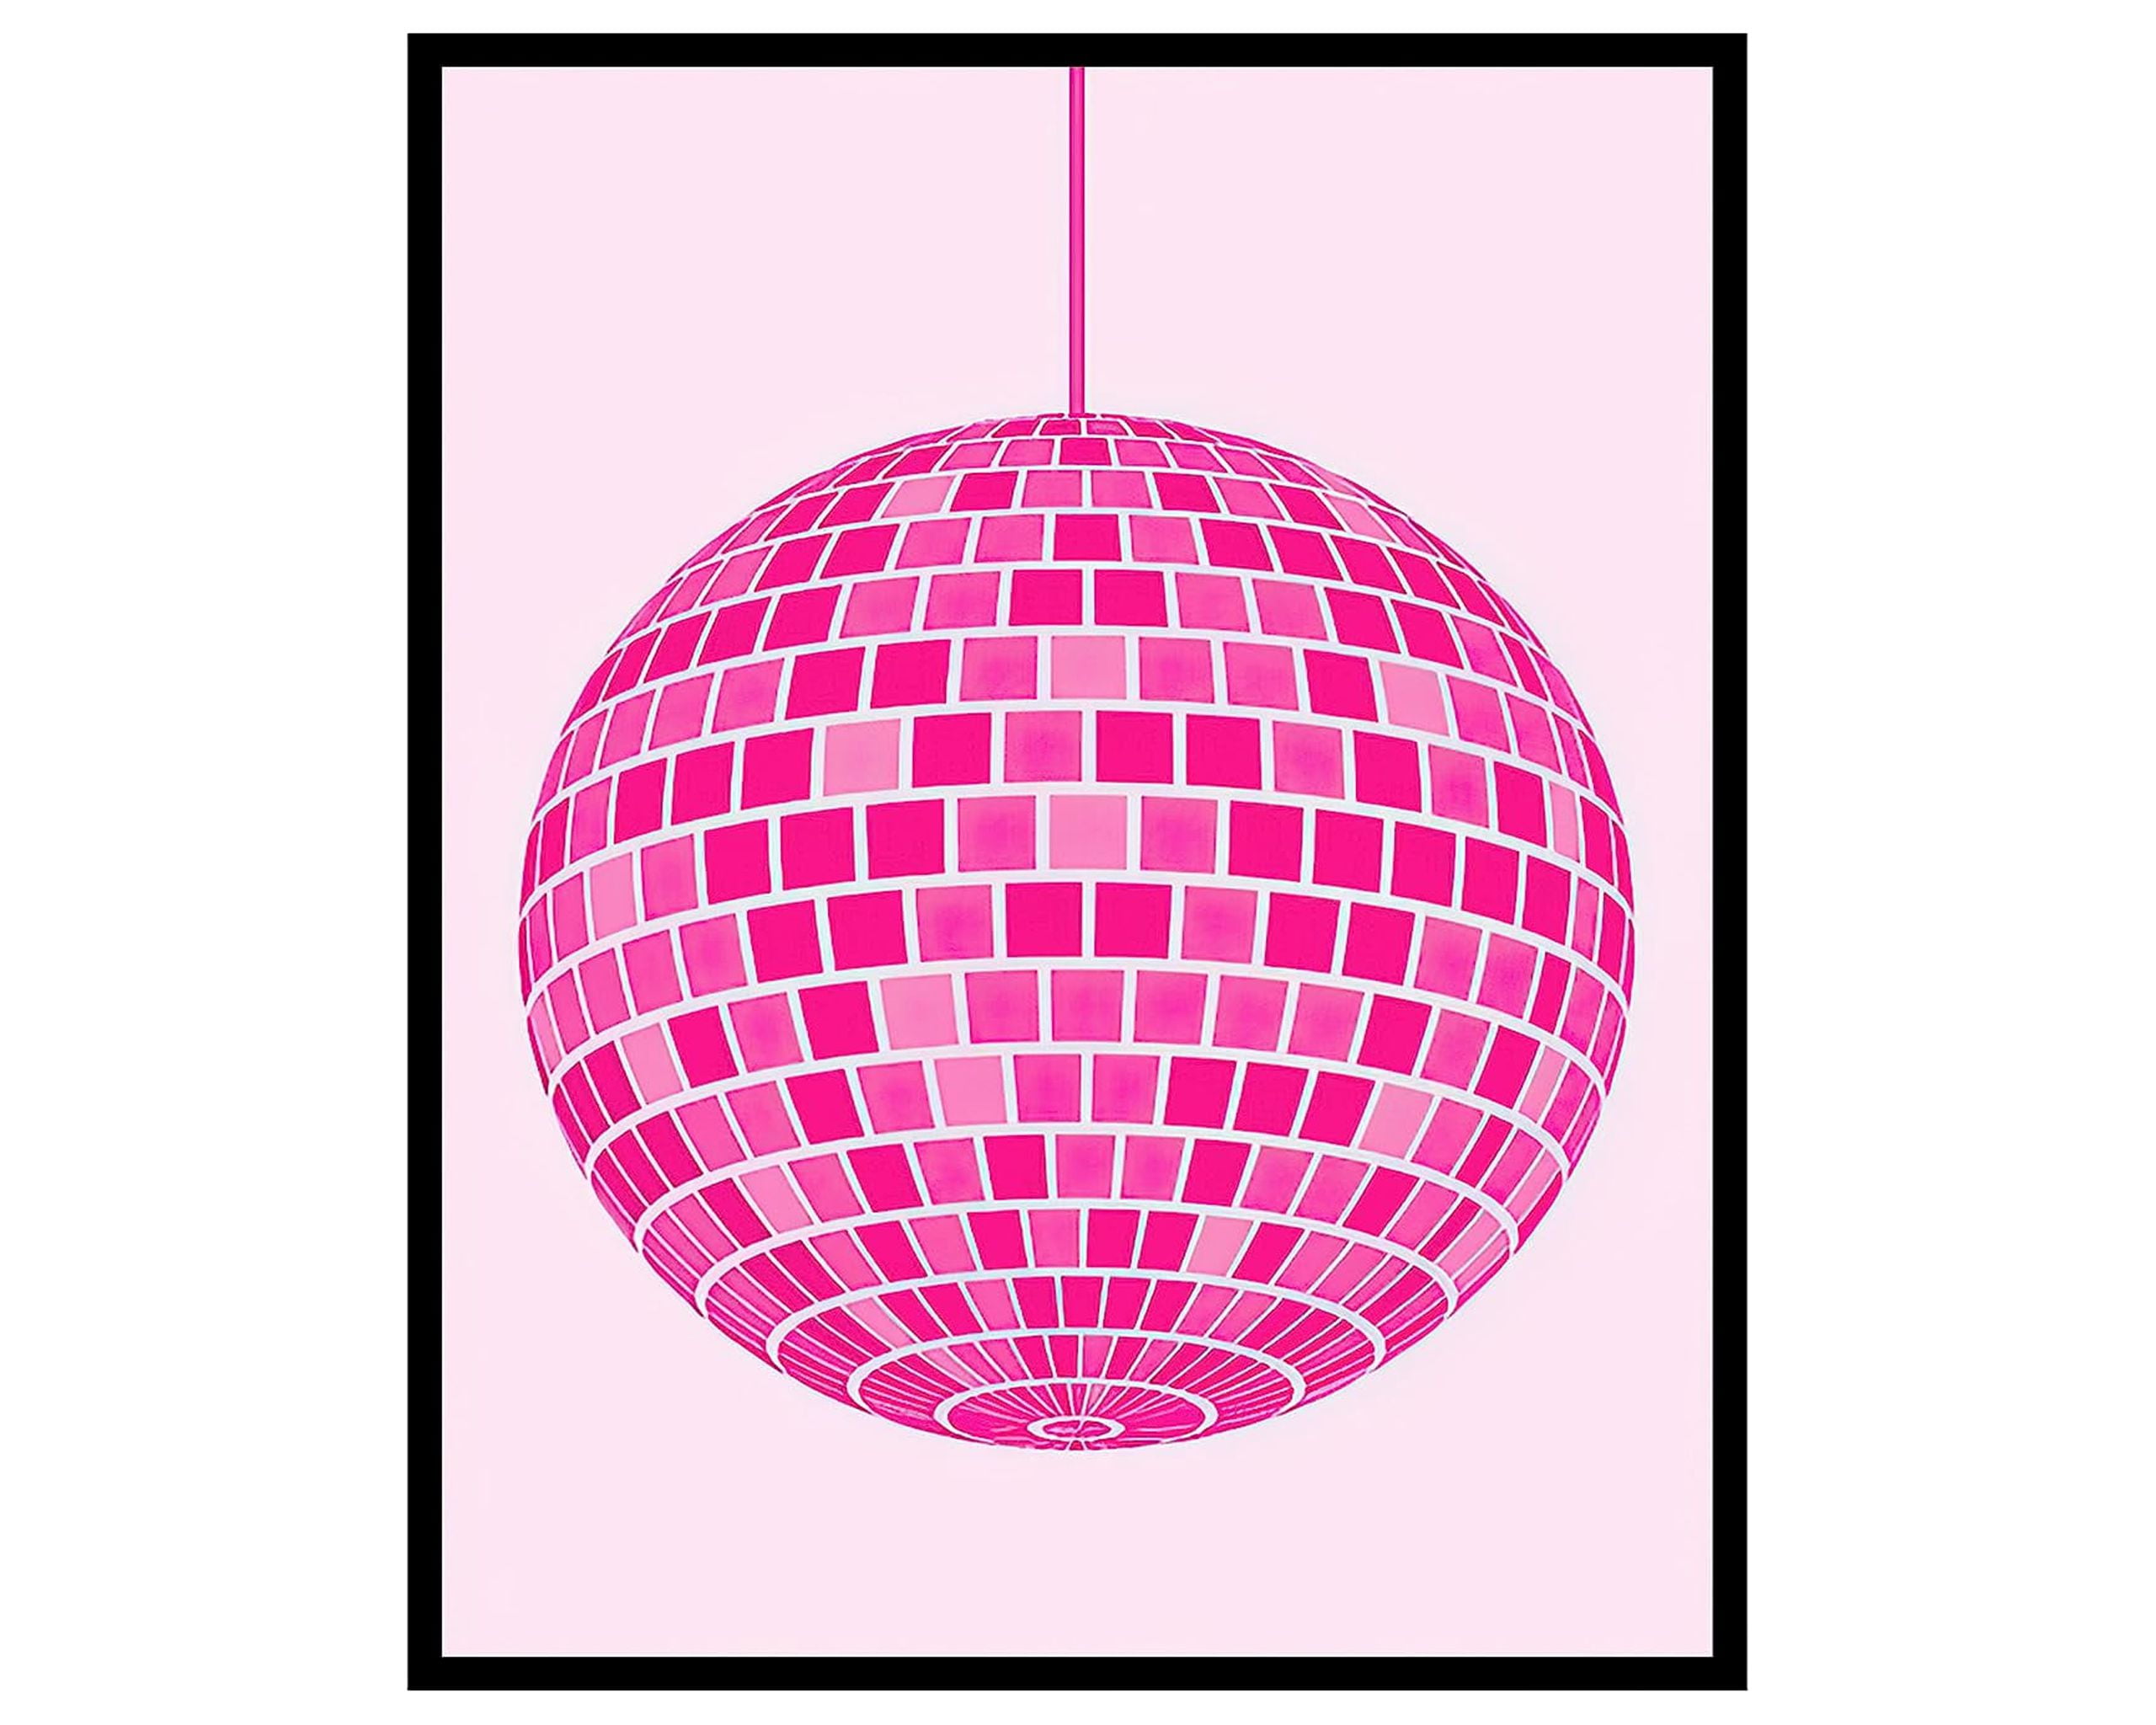 Disco Ball - Disco Ball - Posters and Art Prints